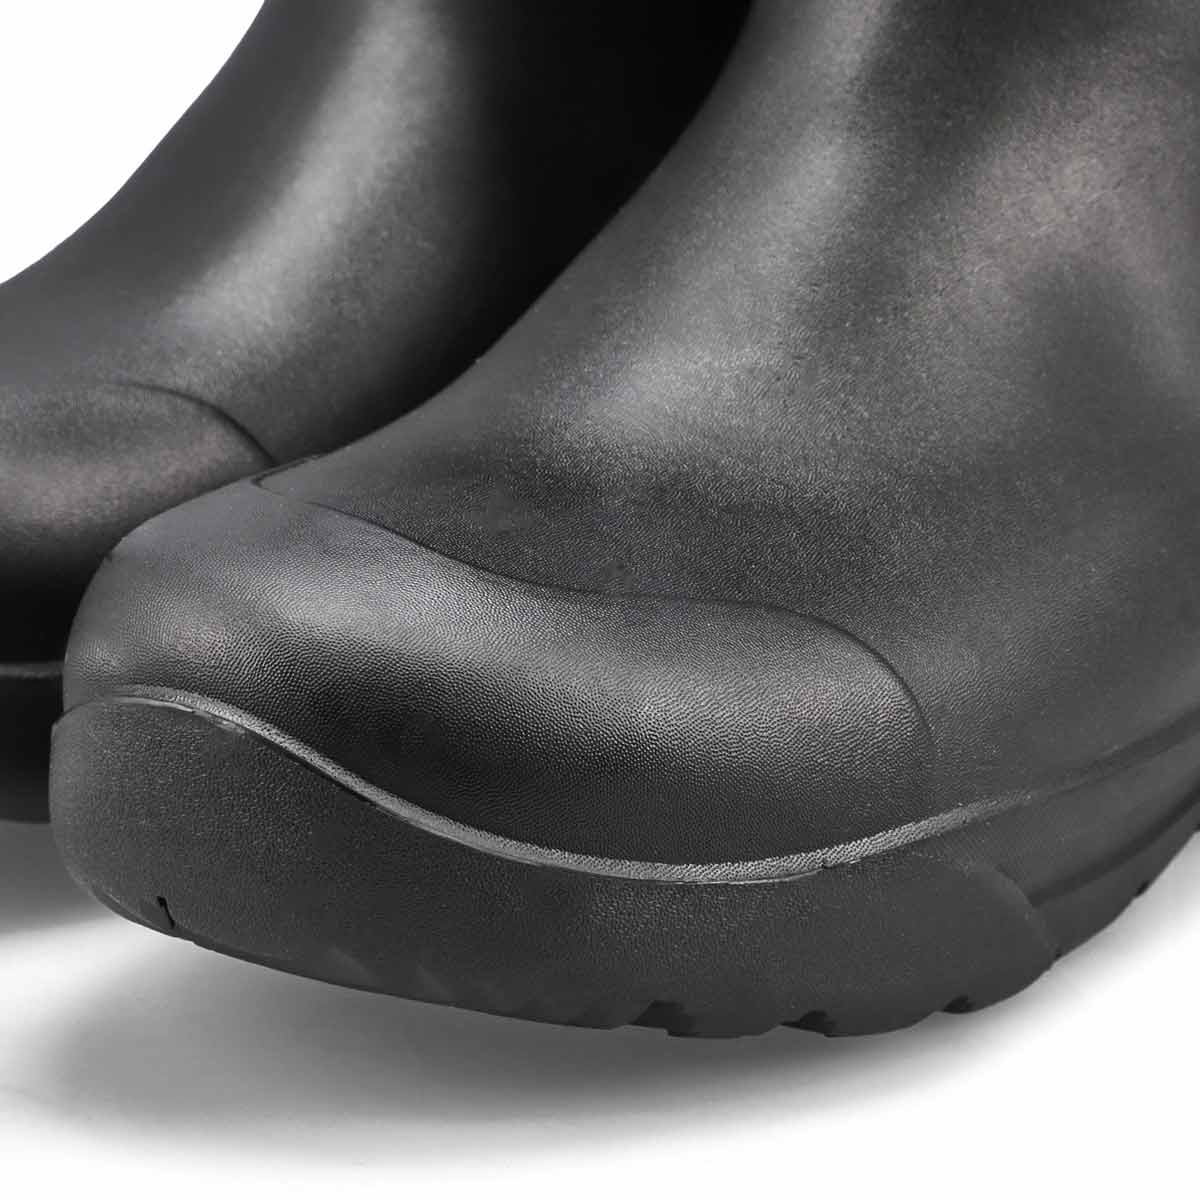 Men's Bozeman Tall Waterproof Boot - Black